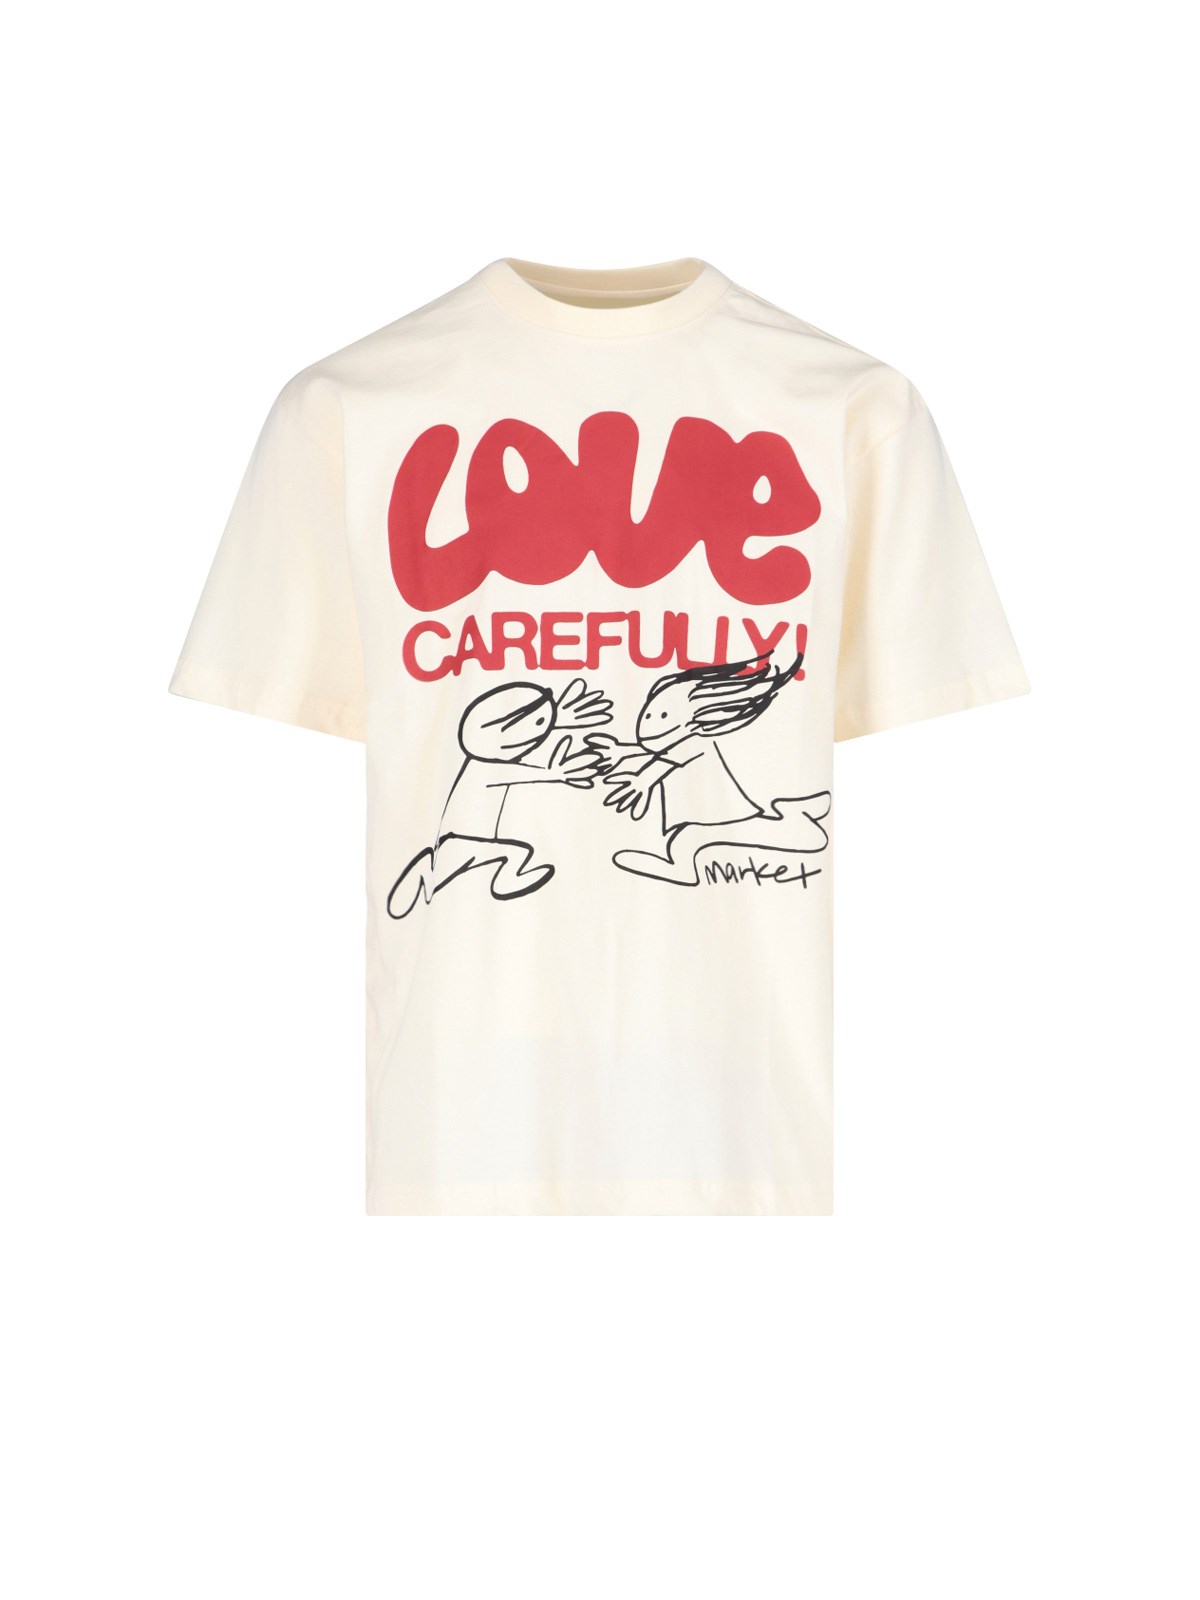 MARKET T-SHIRT "LOVE CAREFULLY"